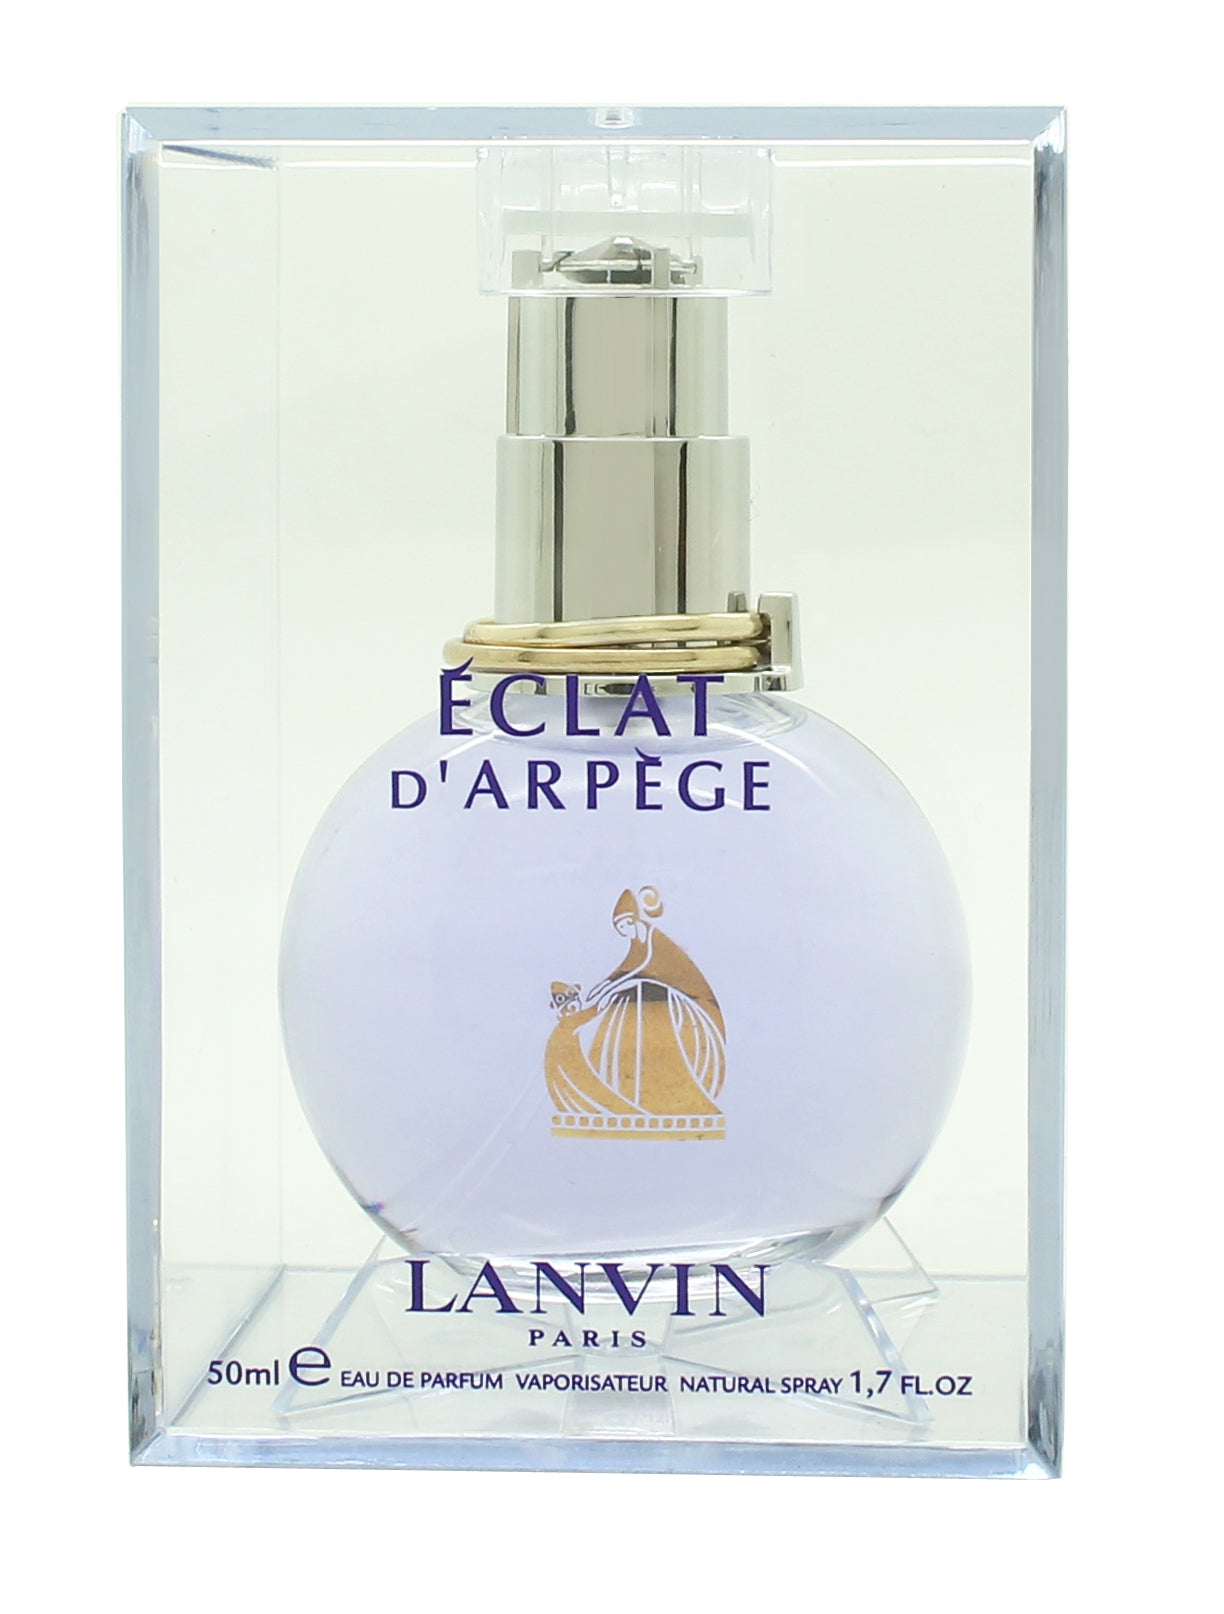 View Lanvin Eclat Arpege Eau de Parfum 50ml Spray information